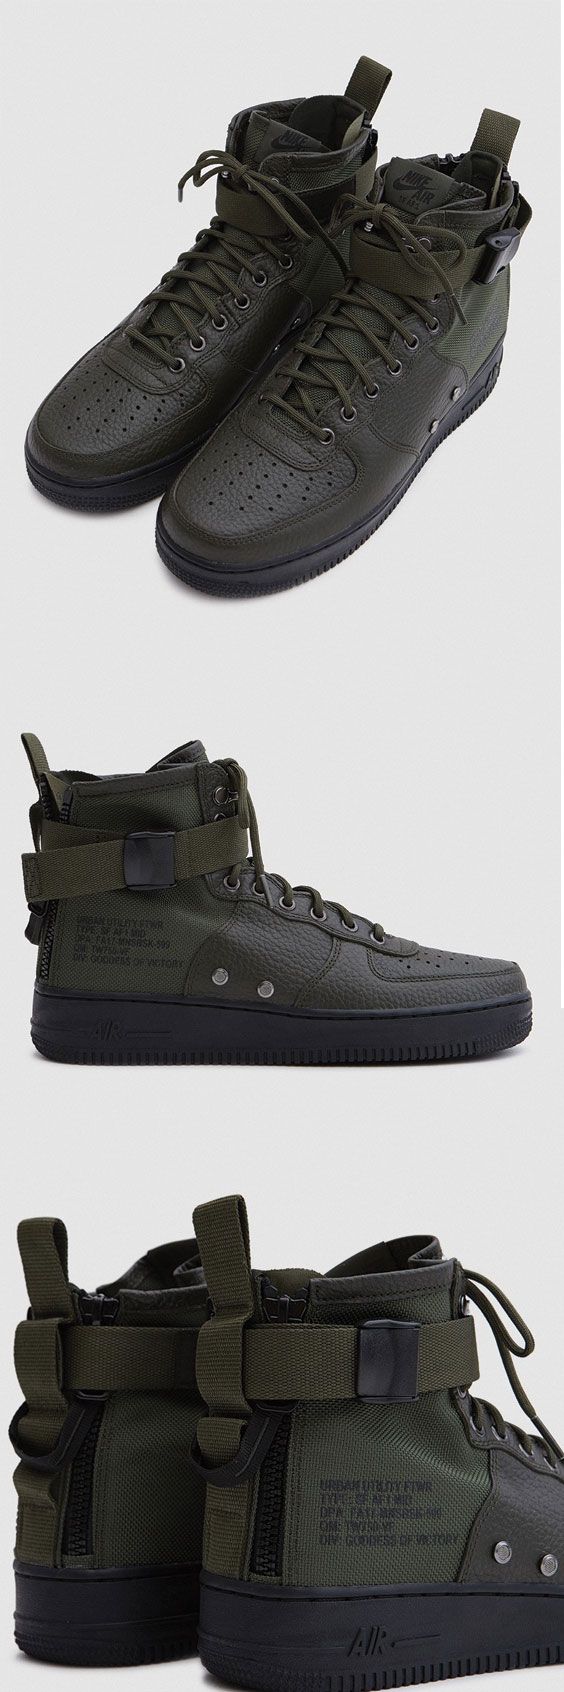 Nike SF Air Force 1 Mid Shoe in Sequoia Black $160...